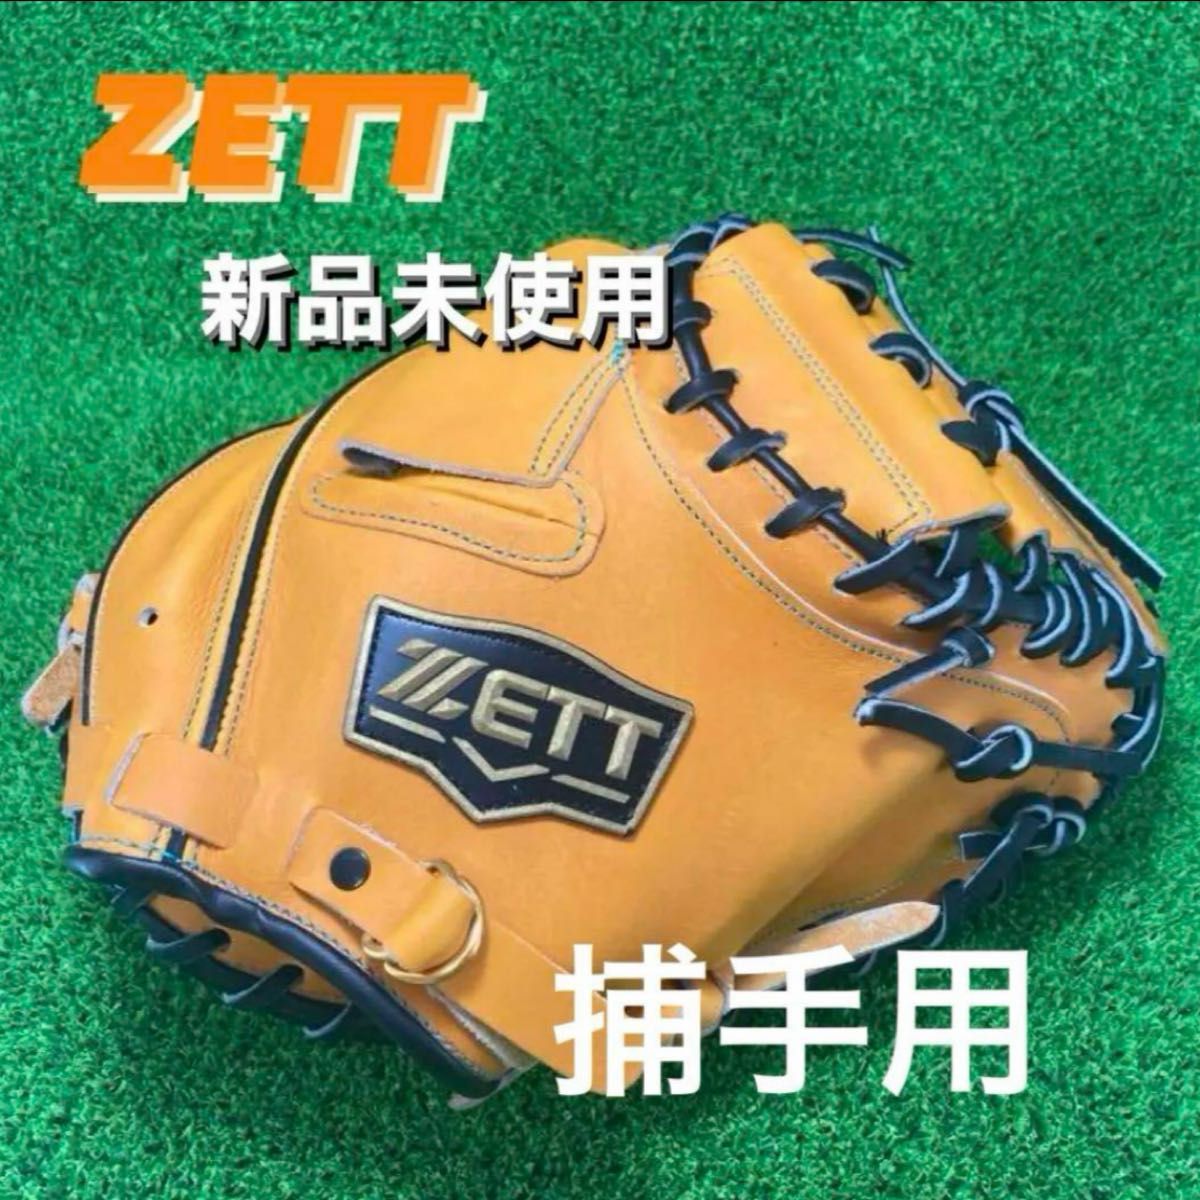 ZETT ゼット 捕手用 キャッチャーミット 硬式野球 グローブ 